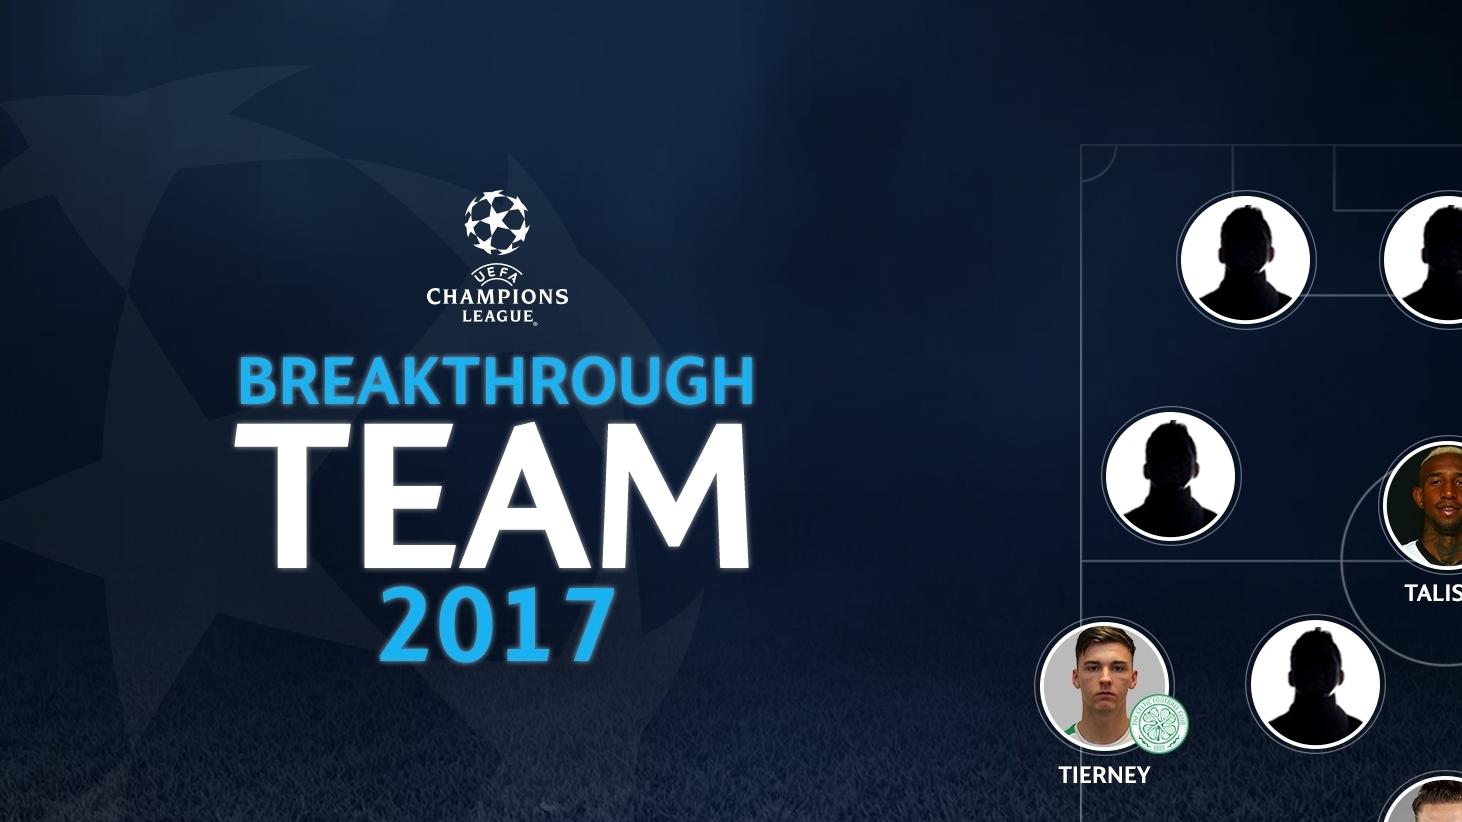 Champions League breakthrough team of 